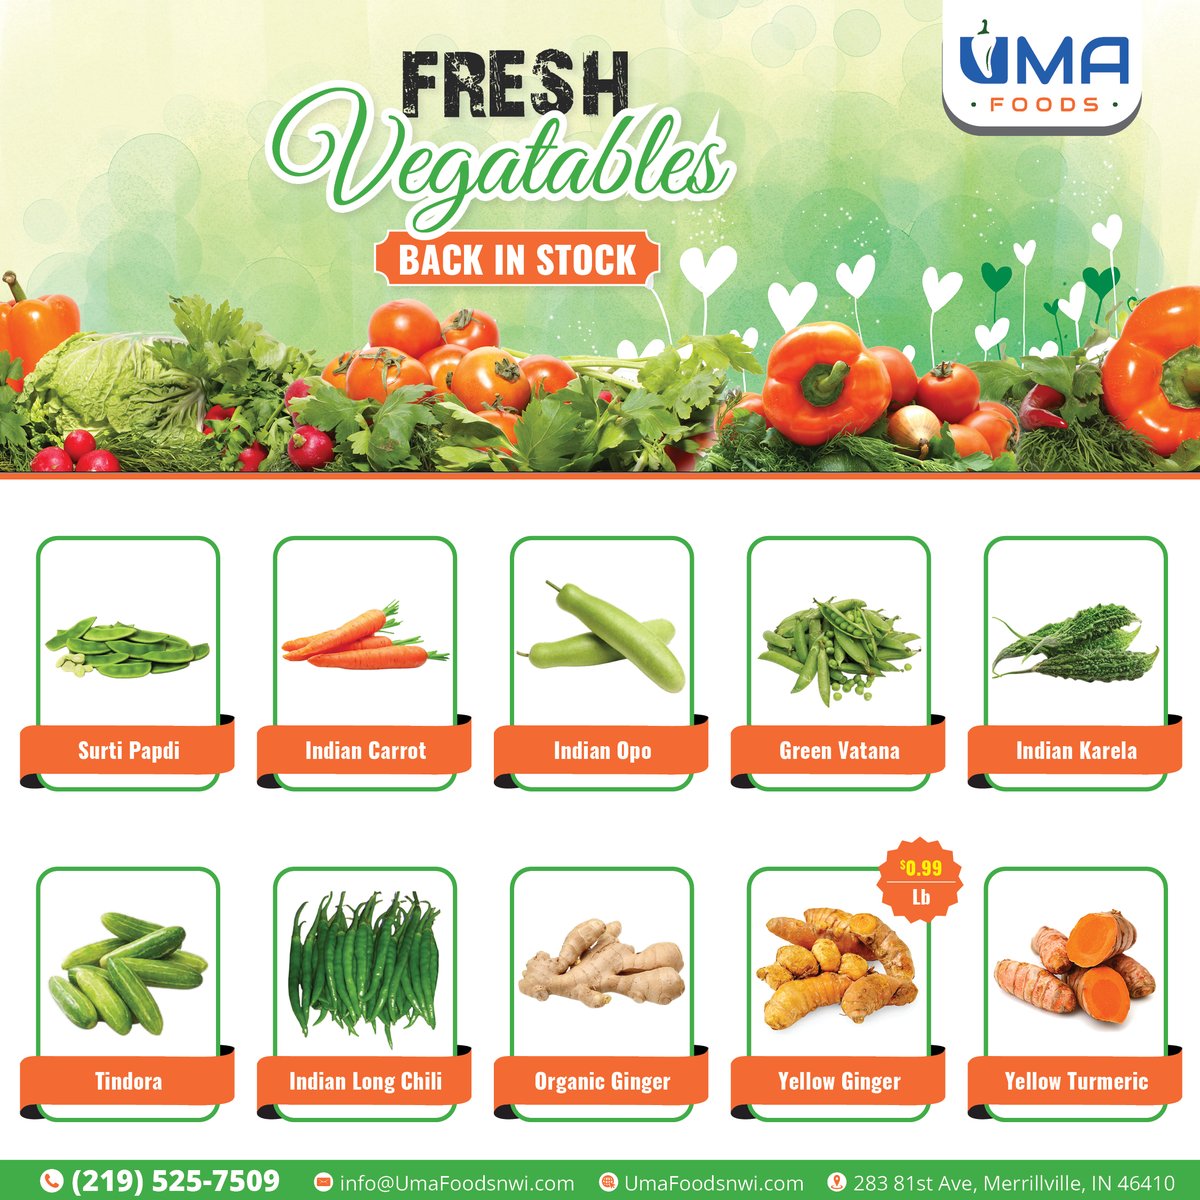 𝐅𝐫𝐞𝐬𝐡 𝐕𝐞𝐠𝐞𝐭𝐚𝐛𝐥𝐞𝐬 𝐁𝐚𝐜𝐤 𝐢𝐧 𝐒𝐭𝐨𝐜𝐤!!

Shop Now👉: umafoodsnwi.com

#indiangrocery #weeklysales #VegetableSale #grocerystore #supermarket #sale #vegetables #fresh #UMAFoods